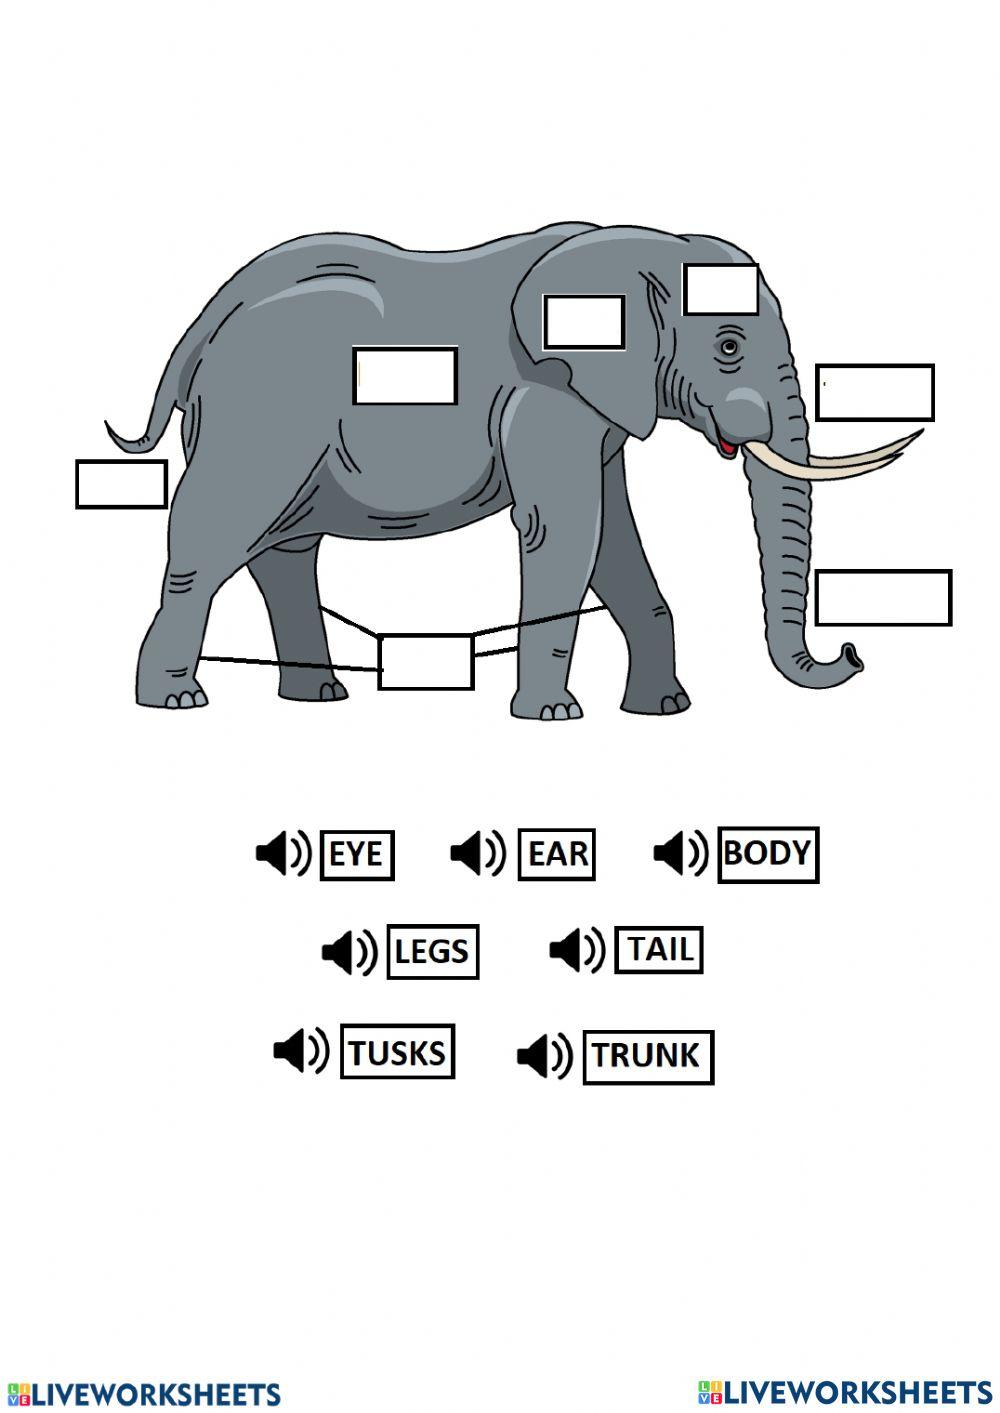 Body Parts of Elephant